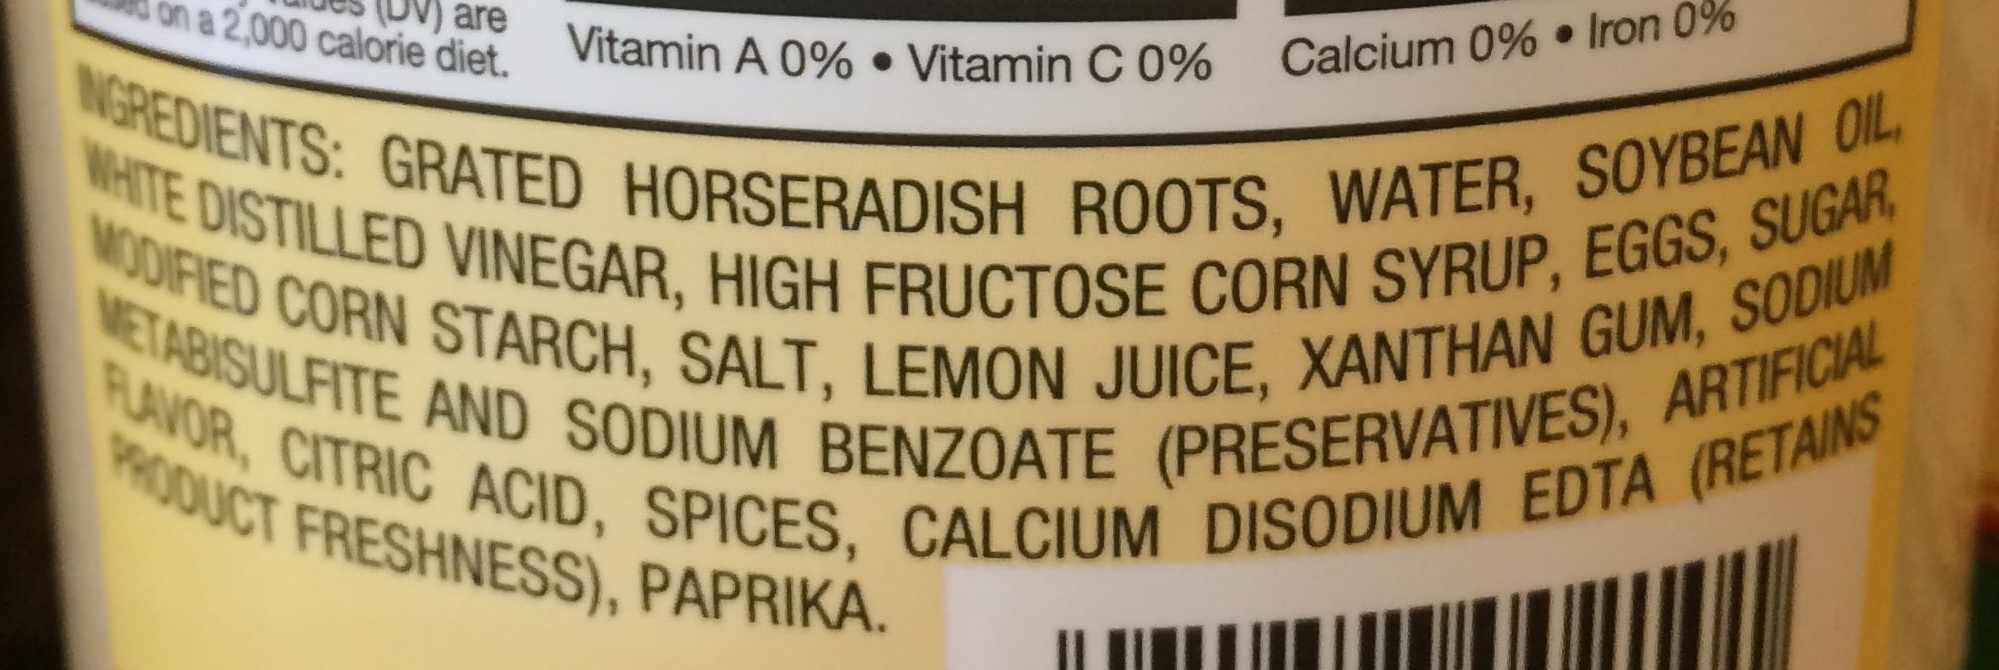 Hot Cream Horseradish - Ingredients